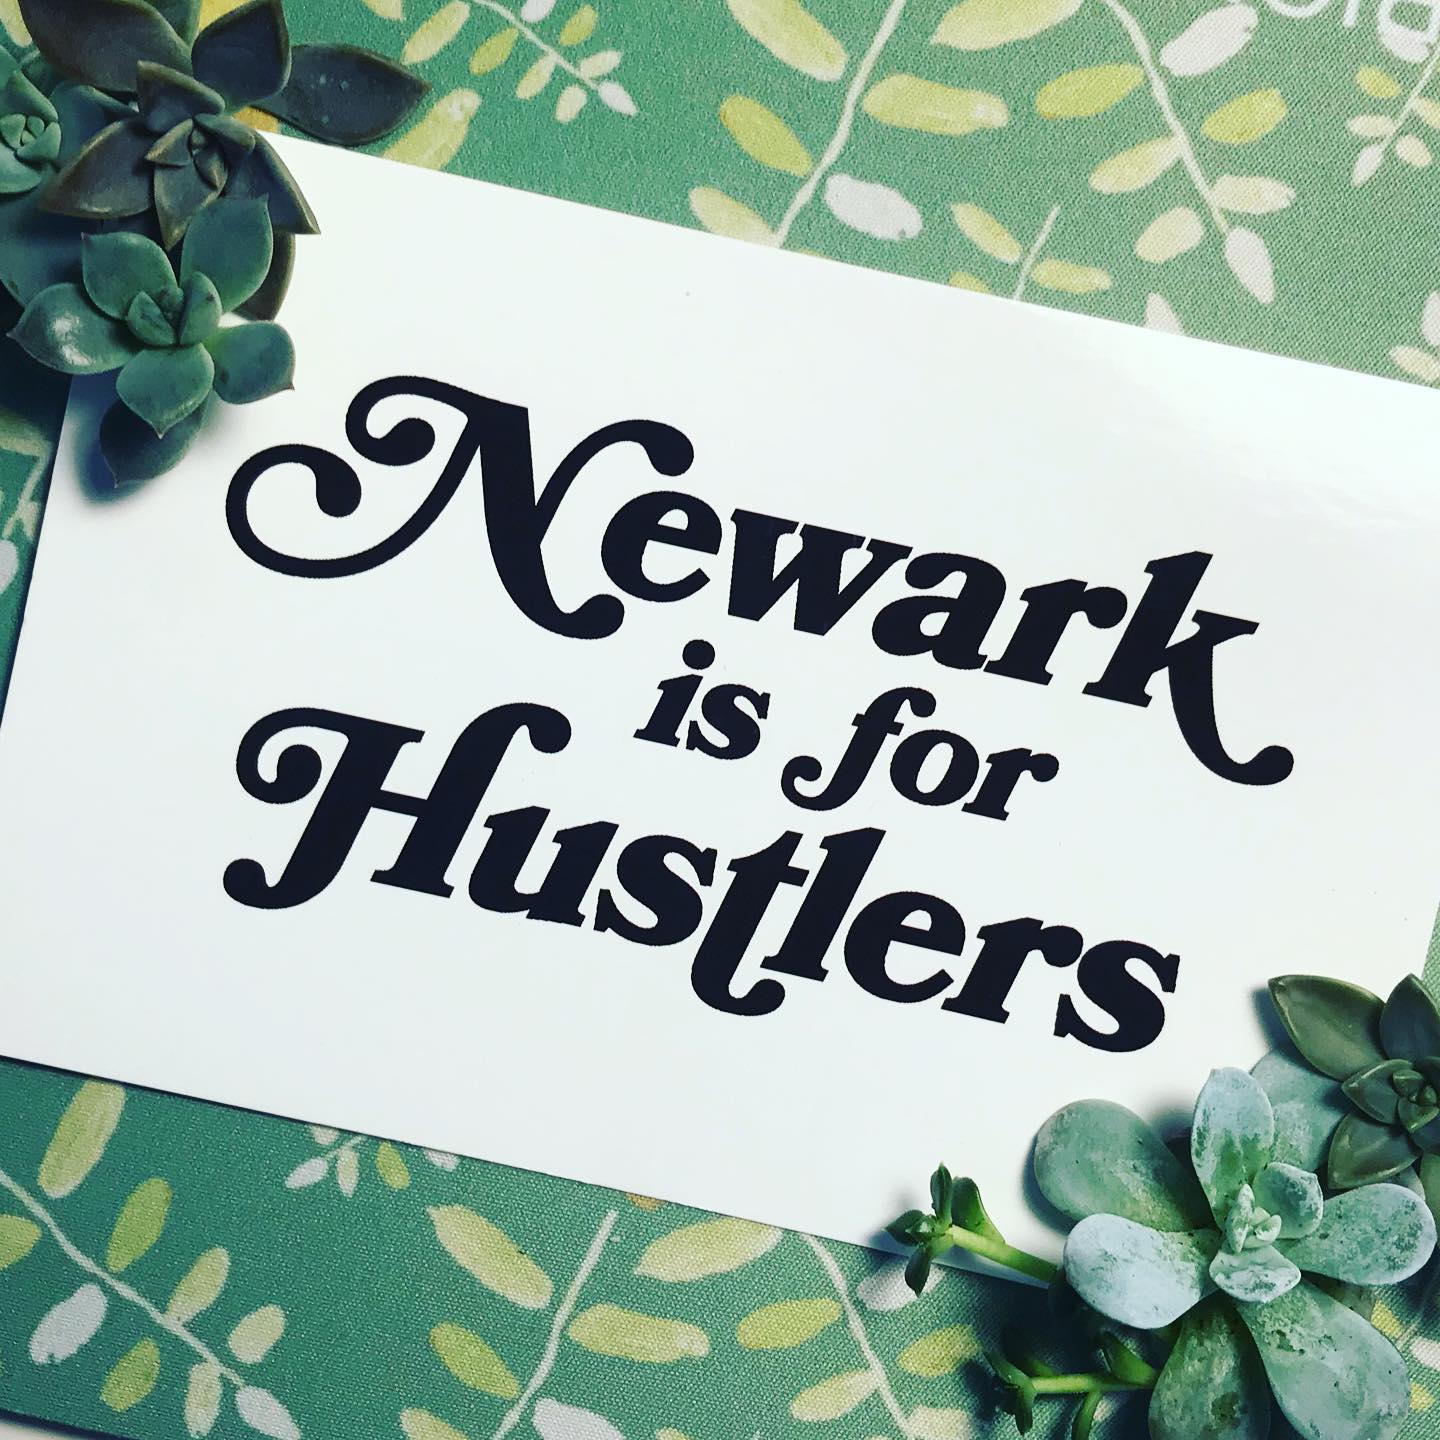 Newark Hustlers Succulents.jpg